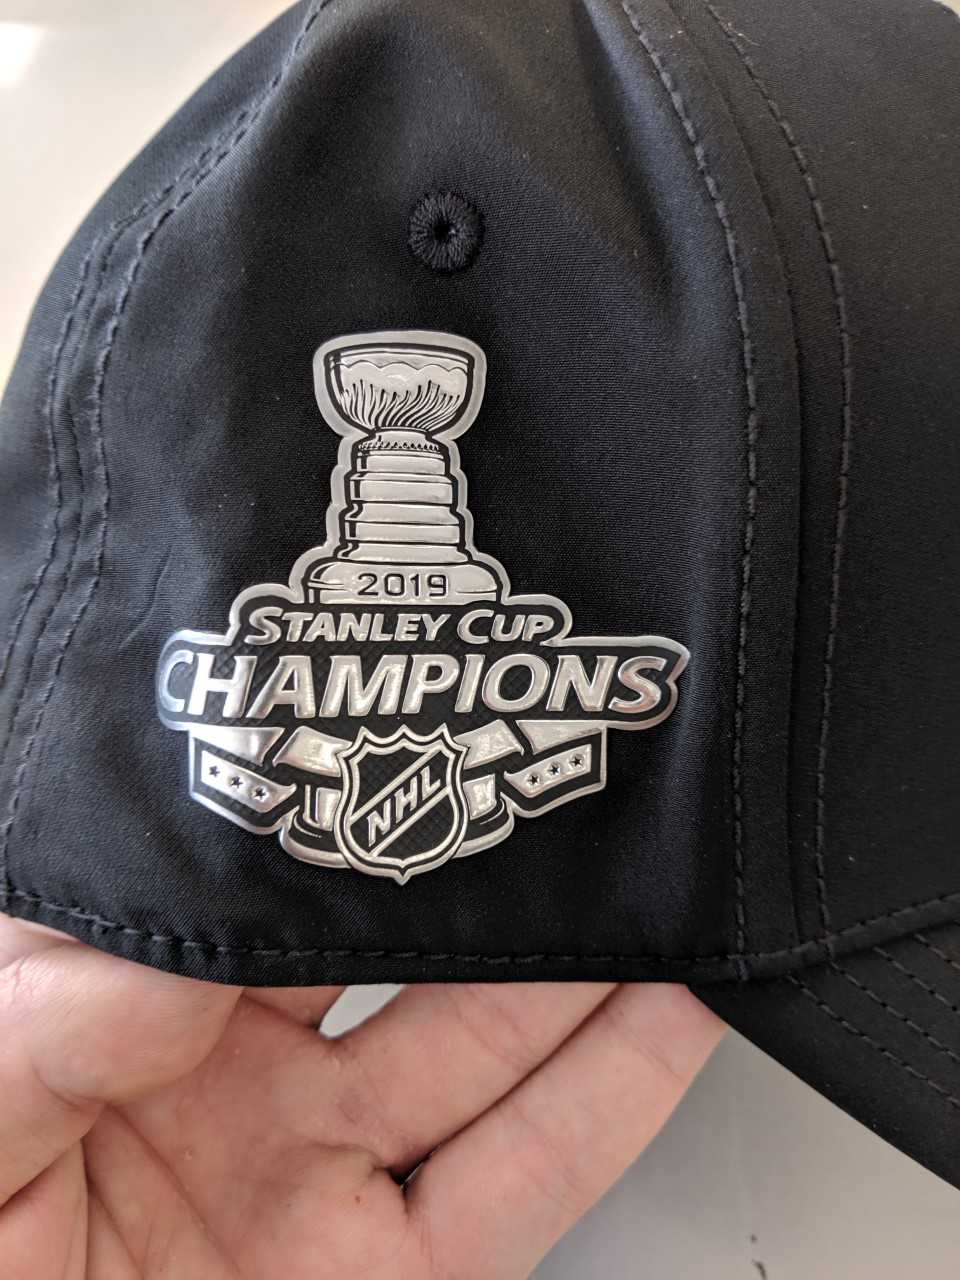 NHL St Louis Blues Adjustable Baseball Cap Hat by Logo Athletic